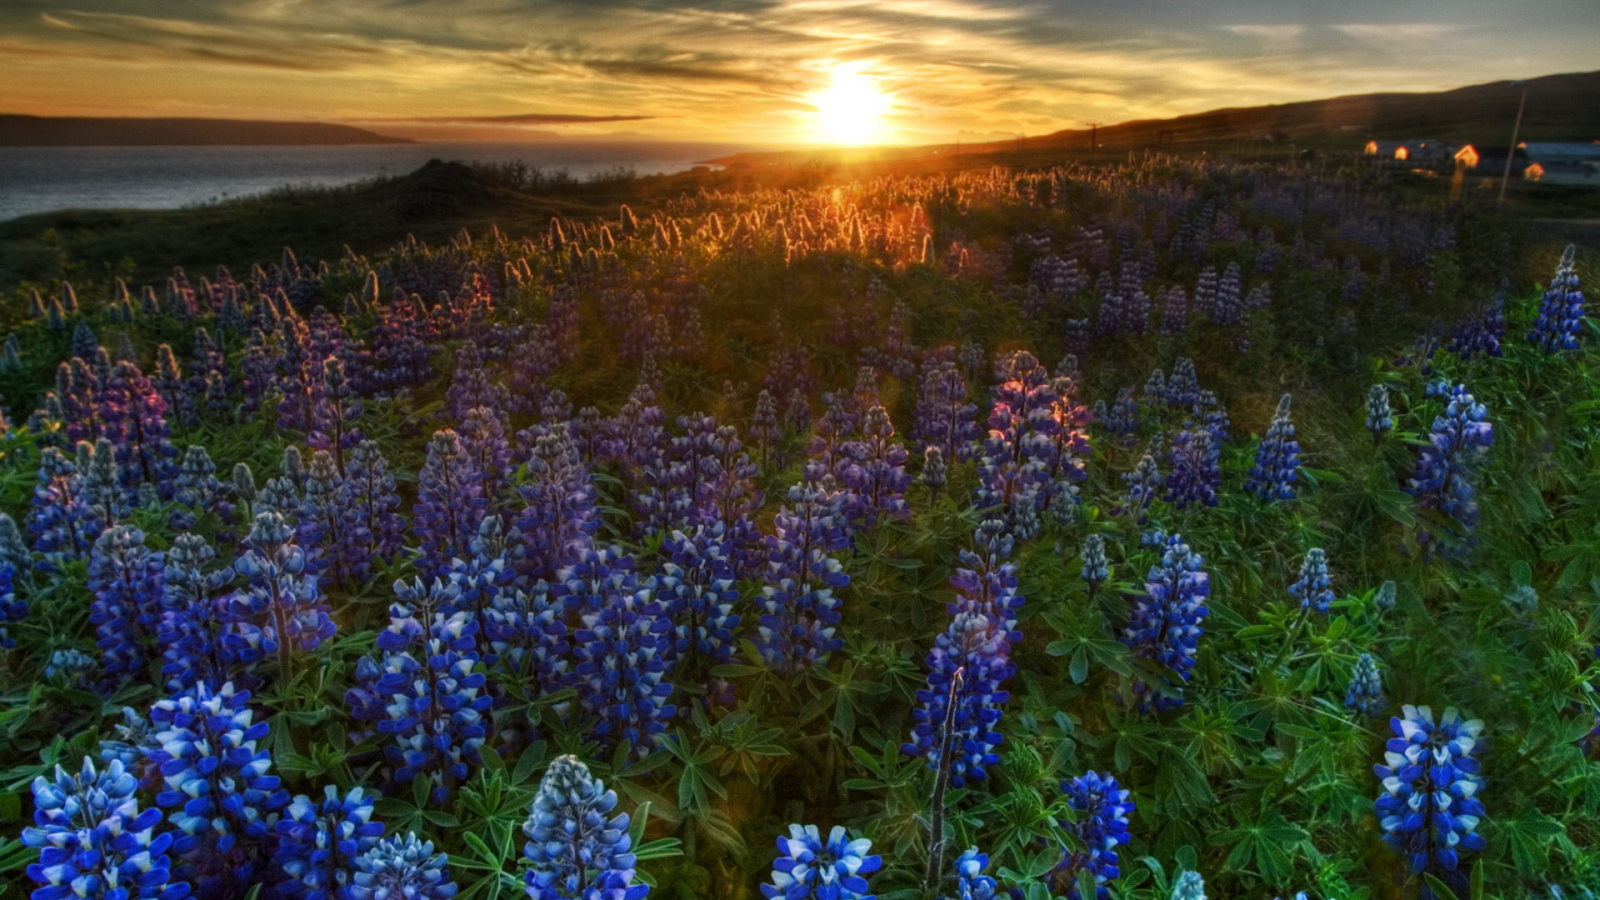 Очаровательные цветы гиацинт на поляне на закате солнца